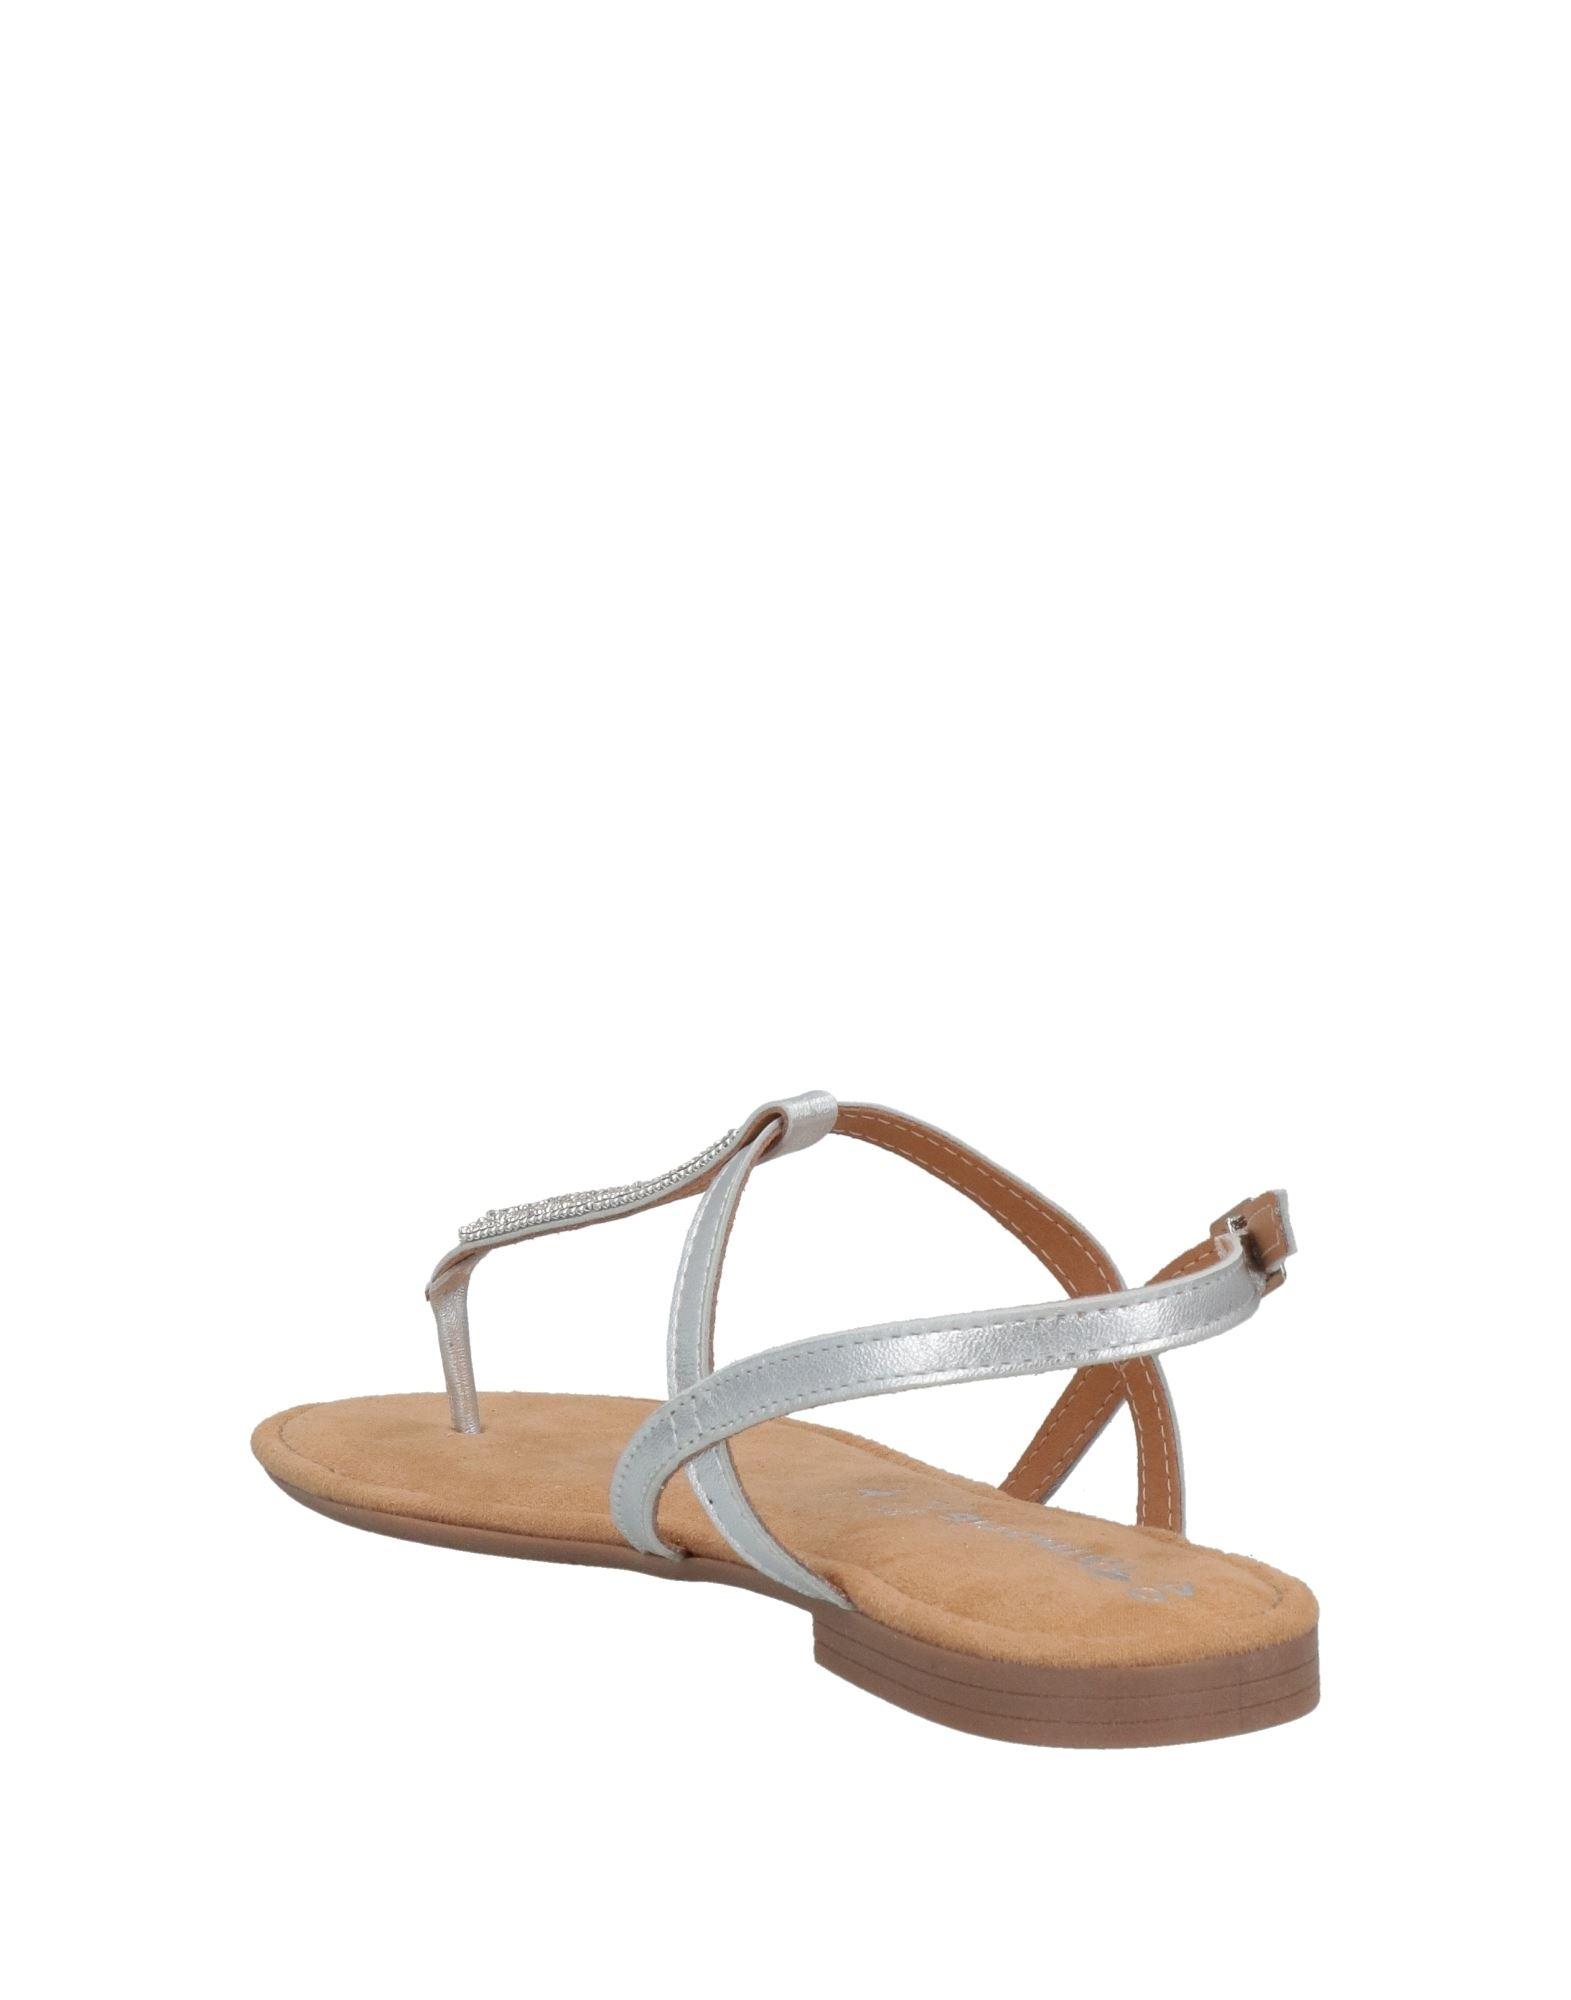 Tamaris Toe Post Sandals in White | Lyst